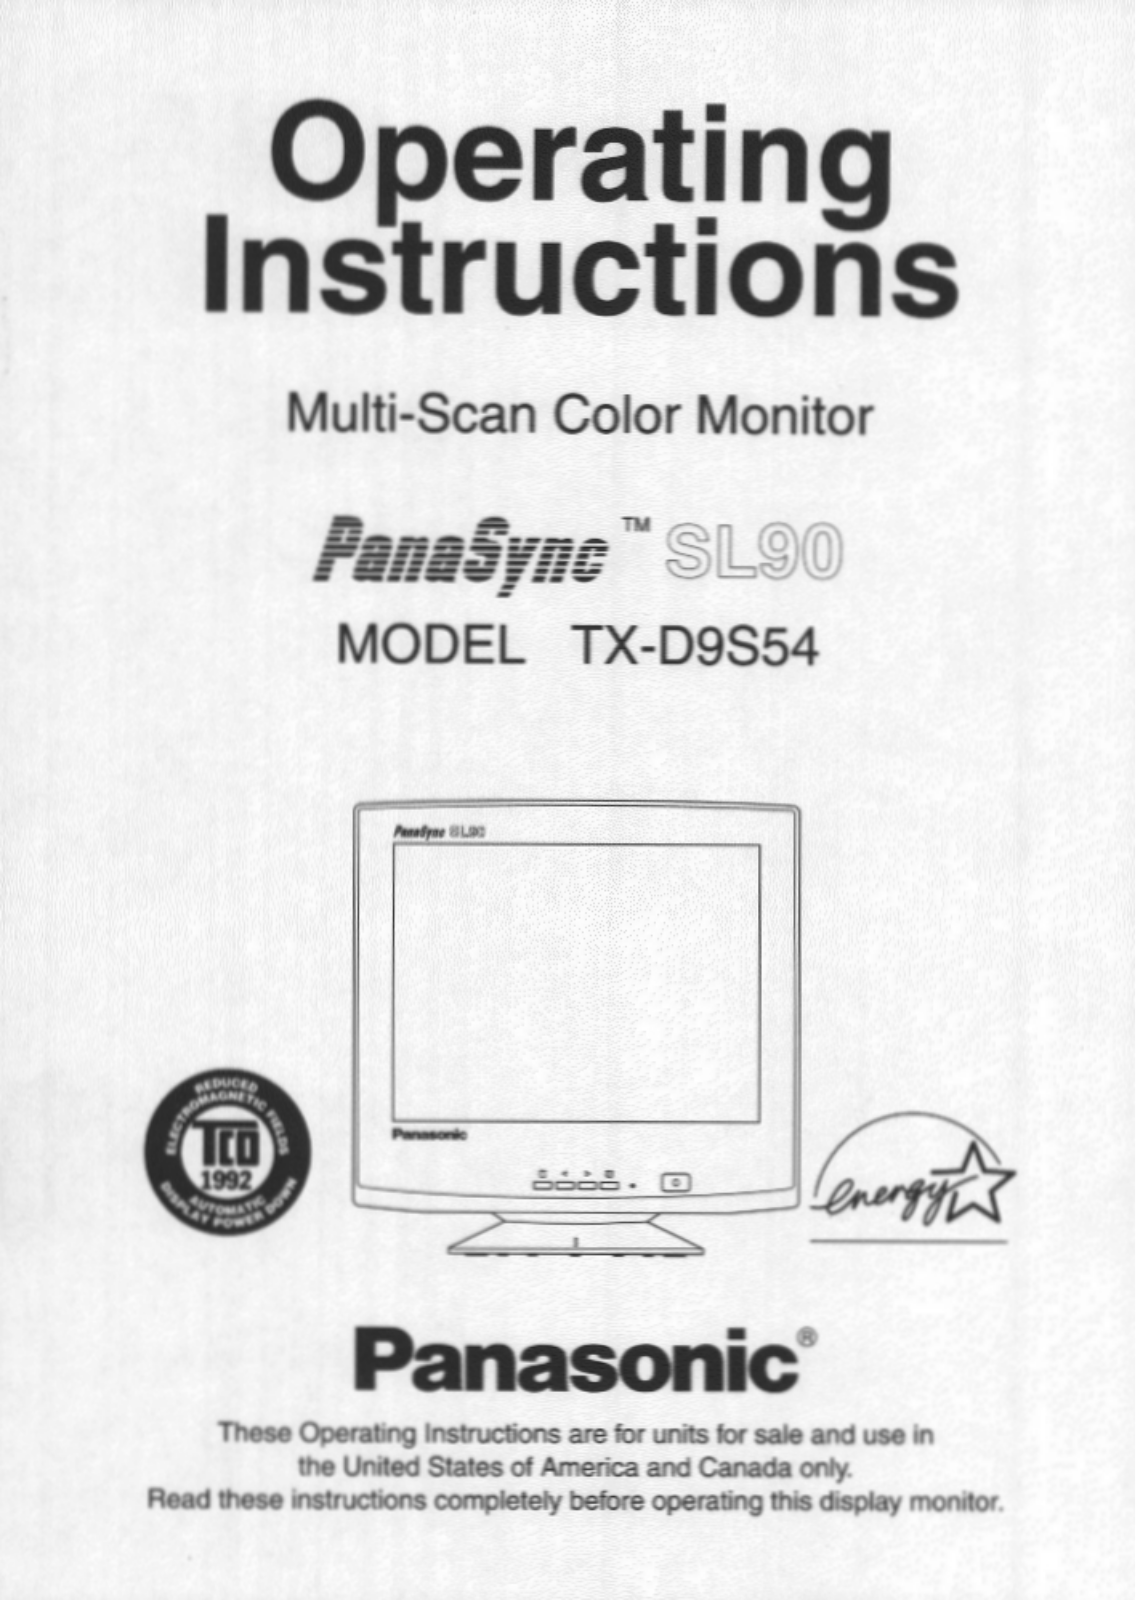 Panasonic sl-90 Operation Manual